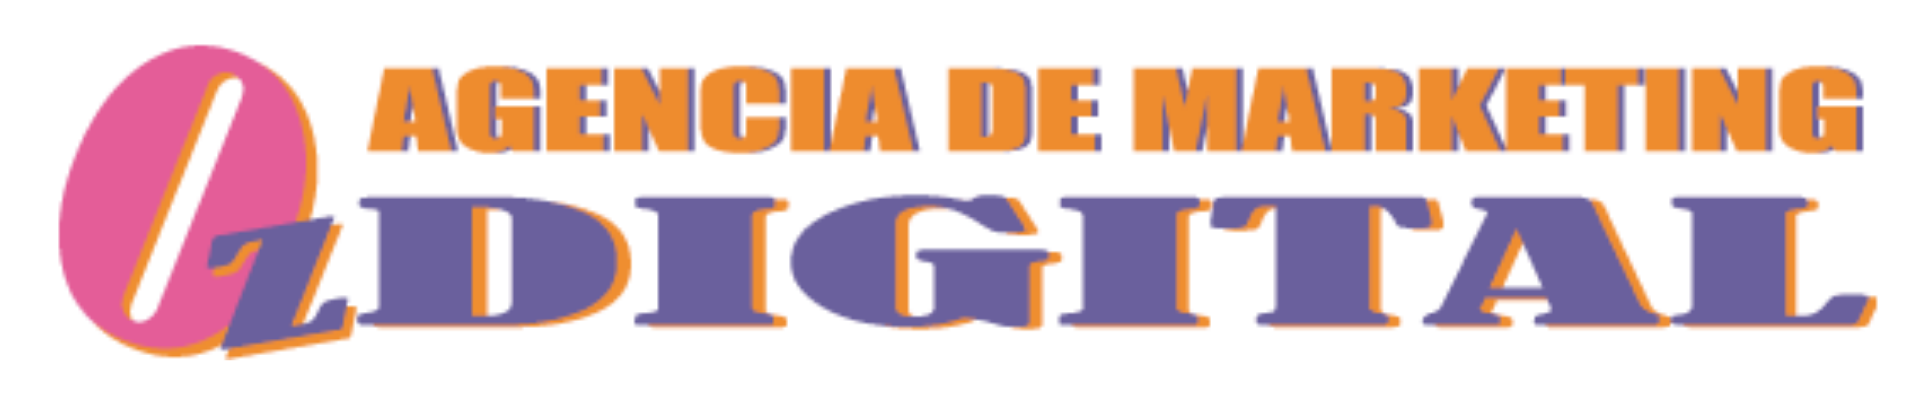 logotipo-oz-digital-agencia-de-marketing-cabecera.png